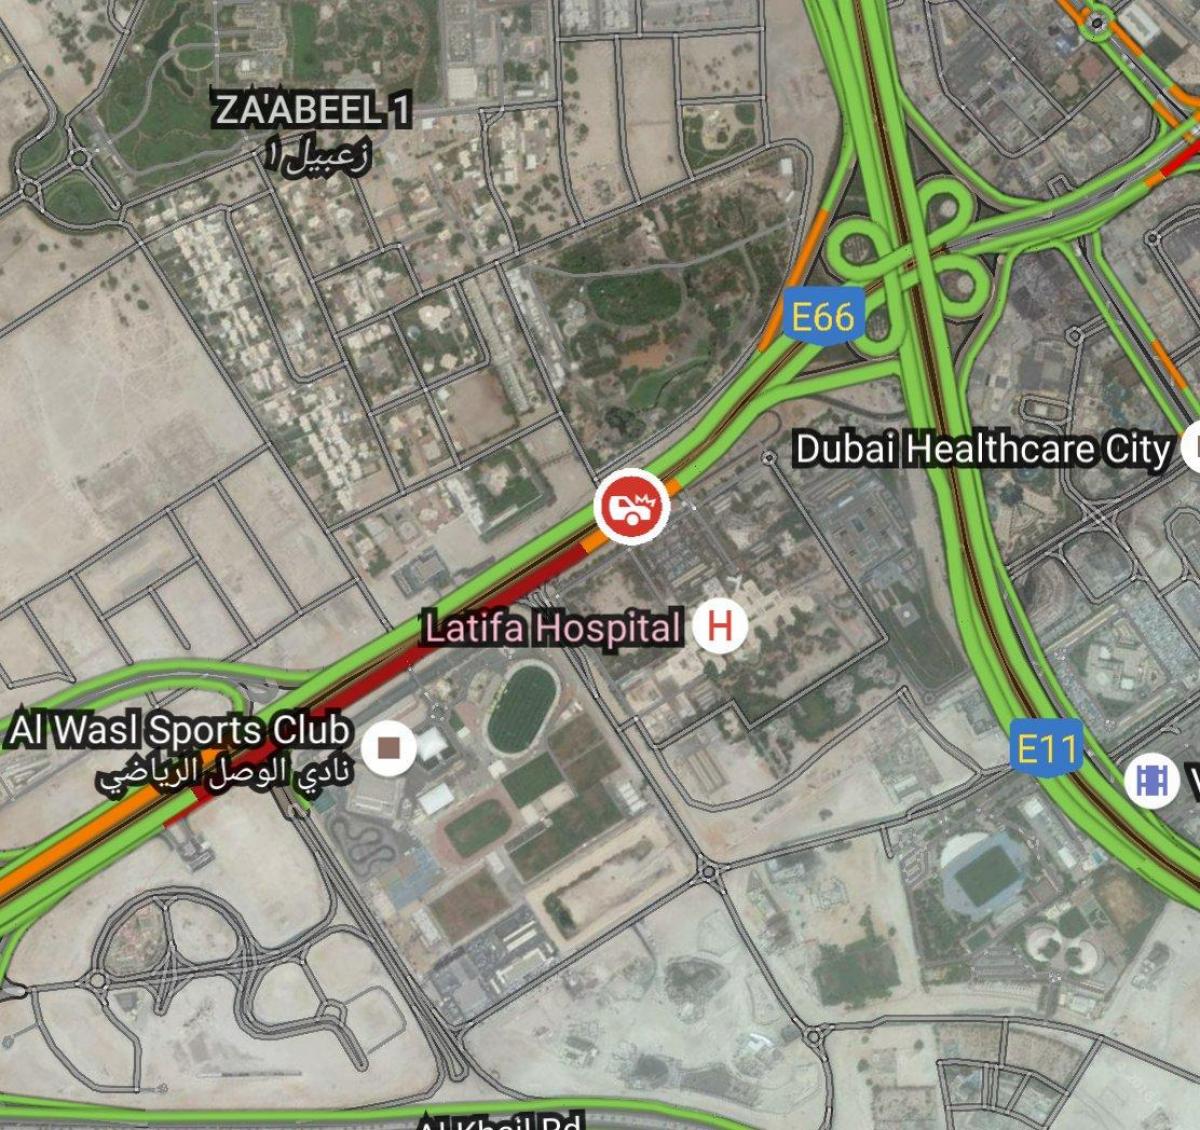 latifa bolnici Dubai lokaciju mapu